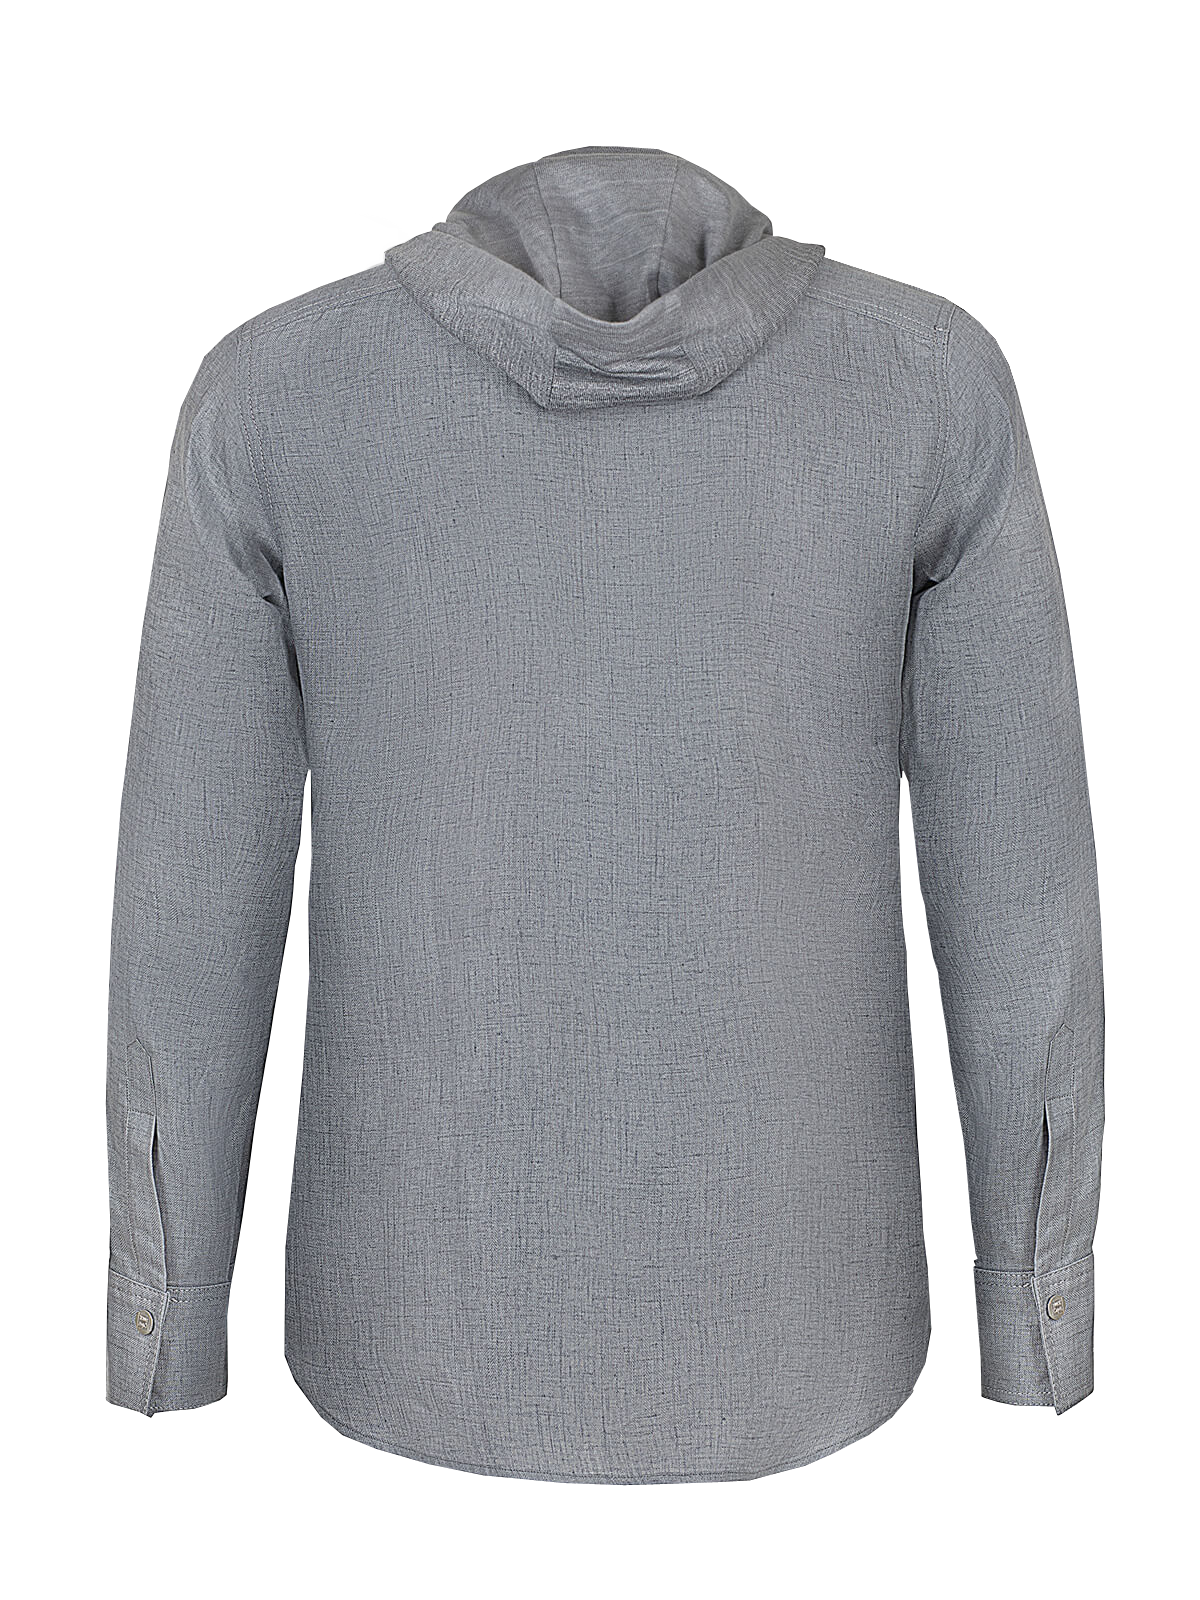 Camicia Cappuccio 100% Capri dark grey linen t-shirt back